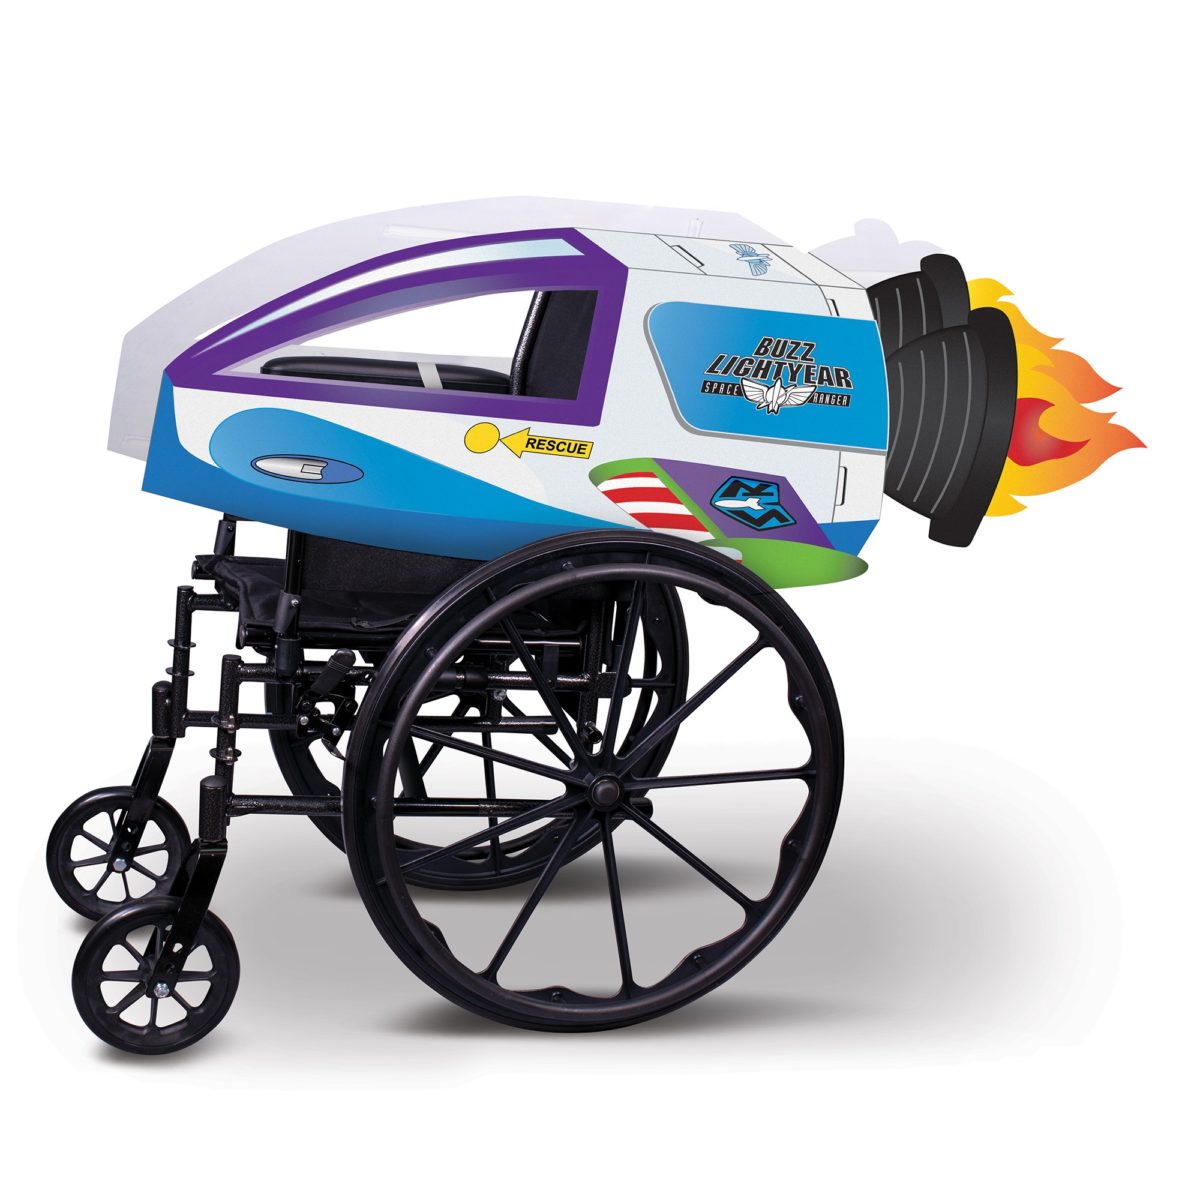 disney-wheelchair-cover-buzz-lightyear-spaceship-3111829